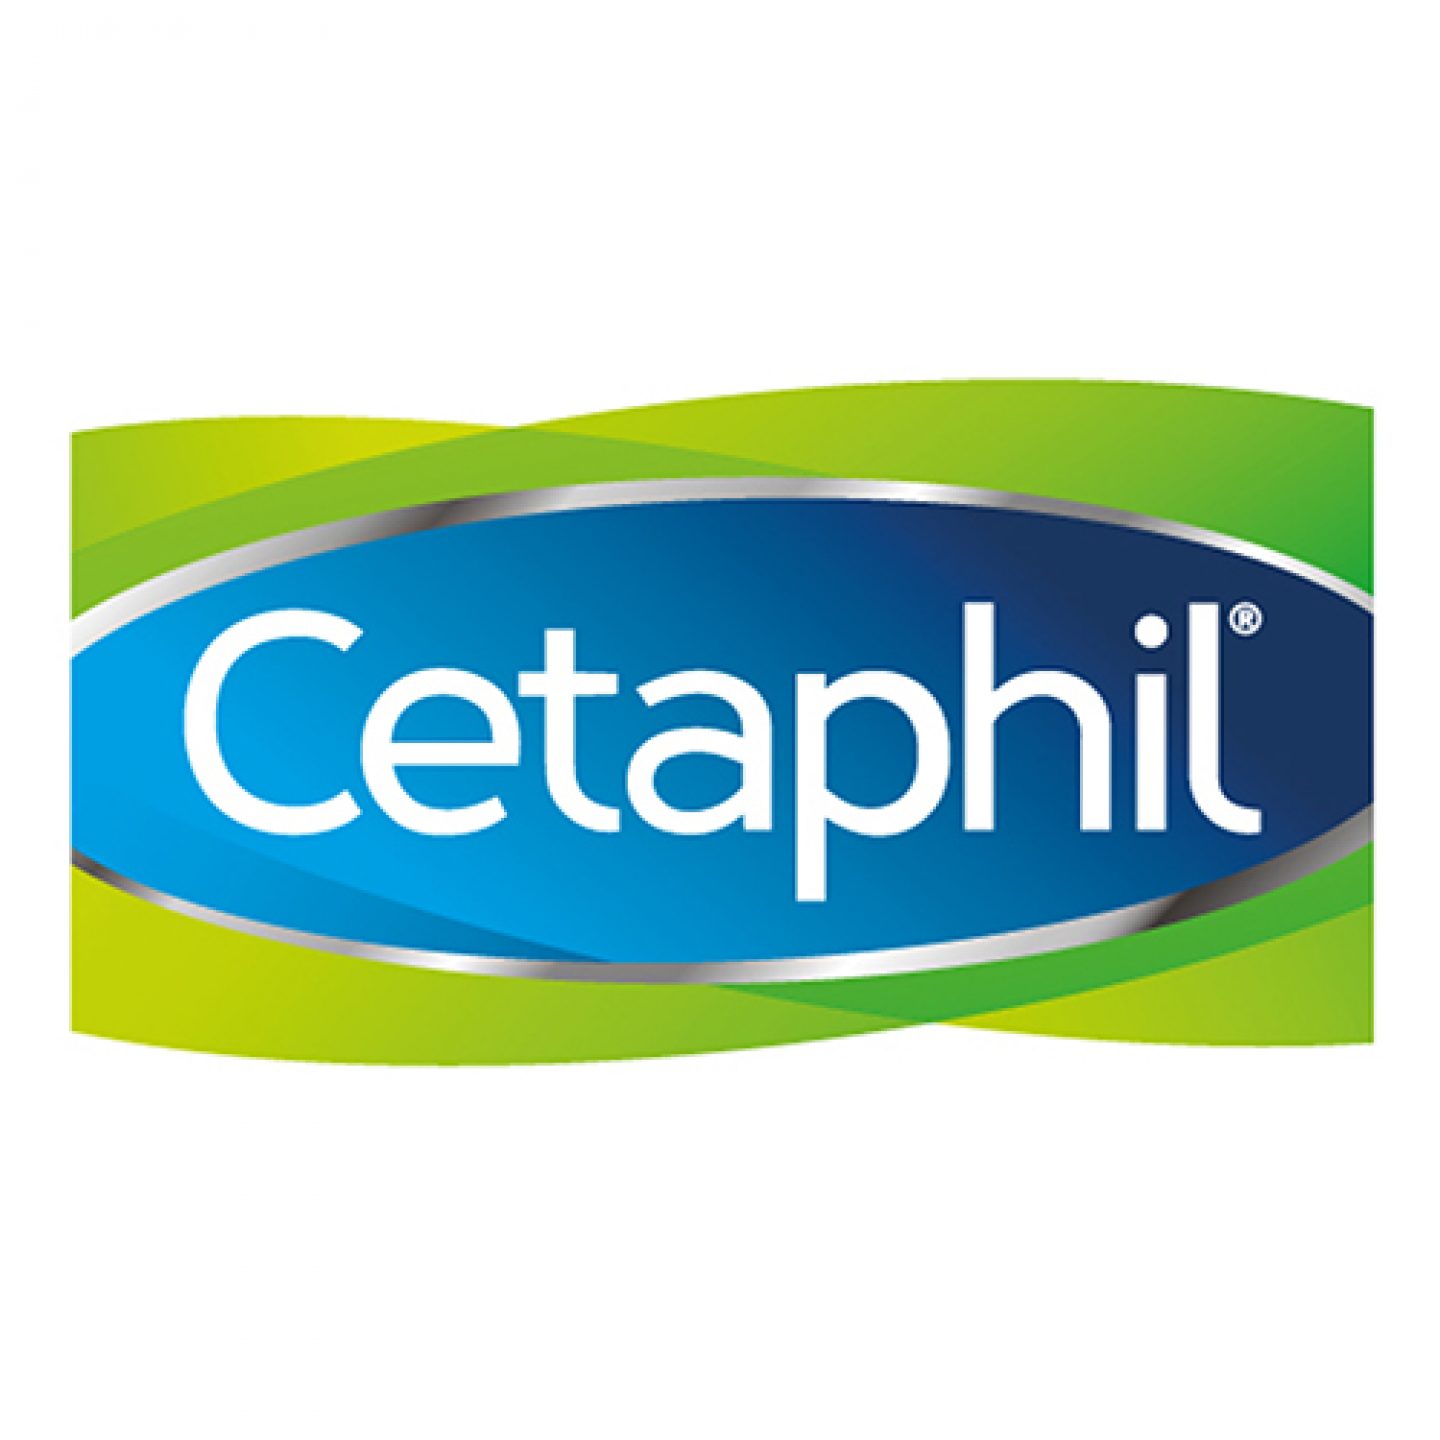 EEZ-Apotheke Marken Logo Cetaphil